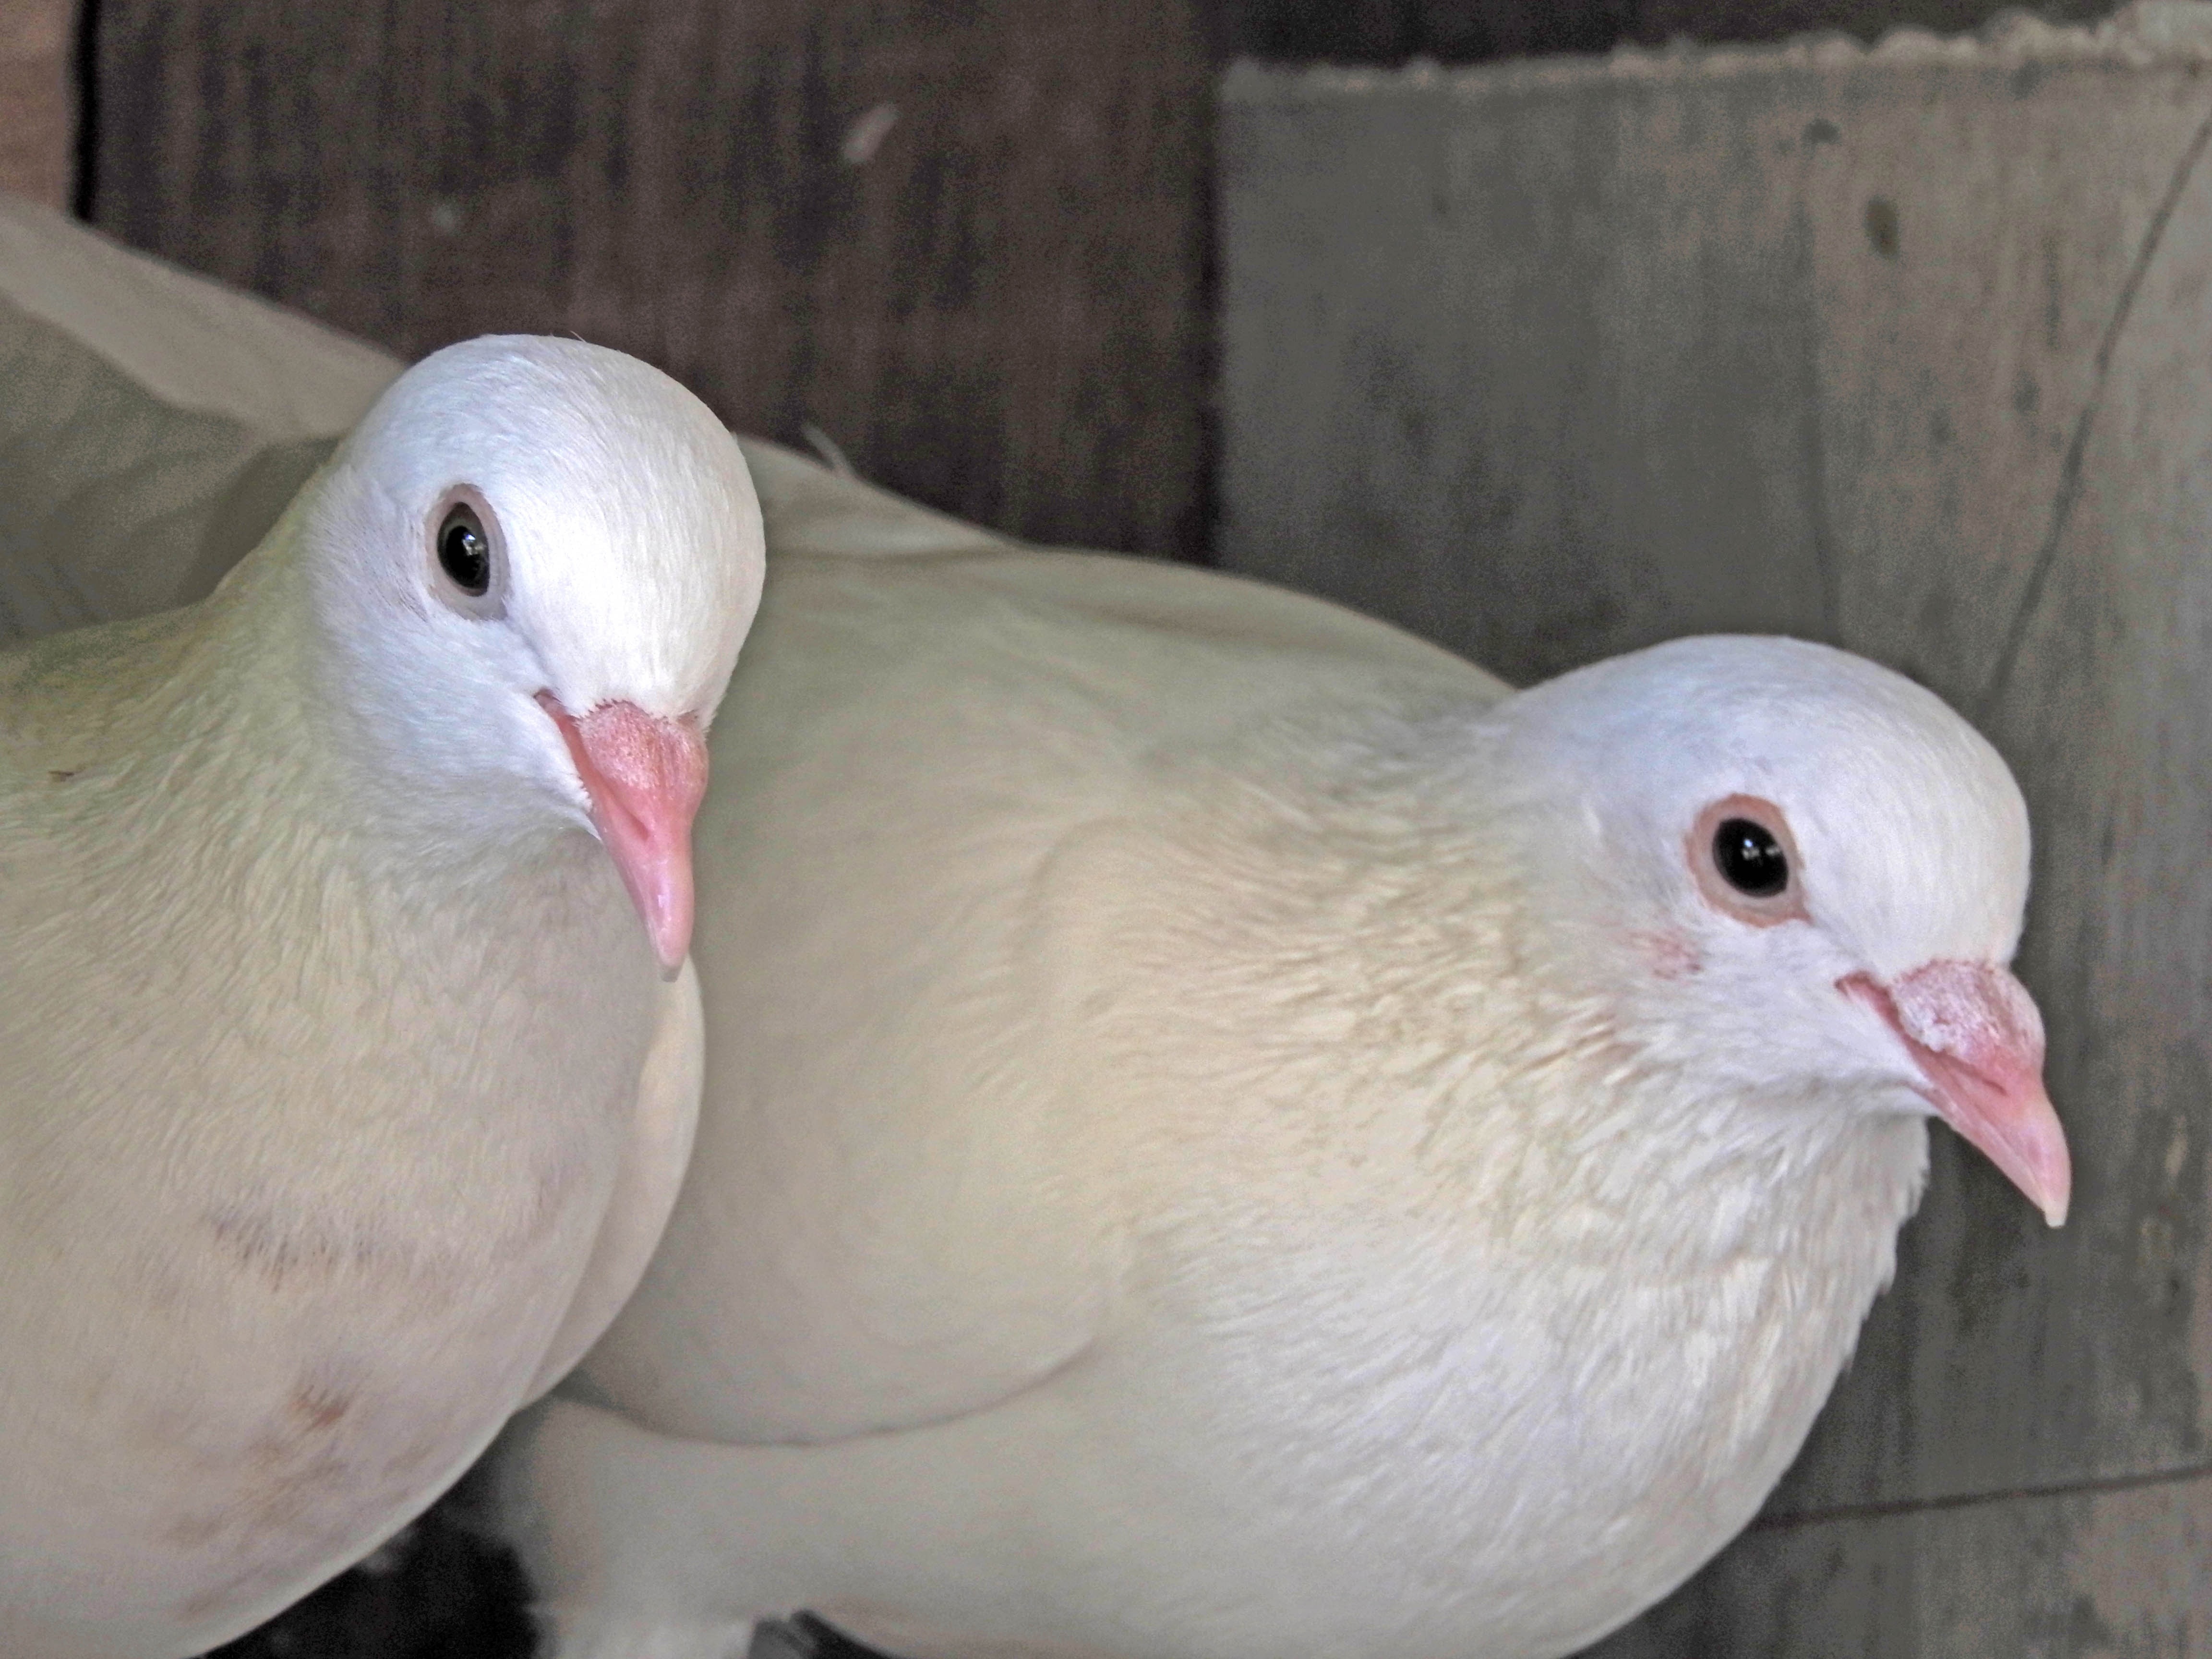 2 white birds